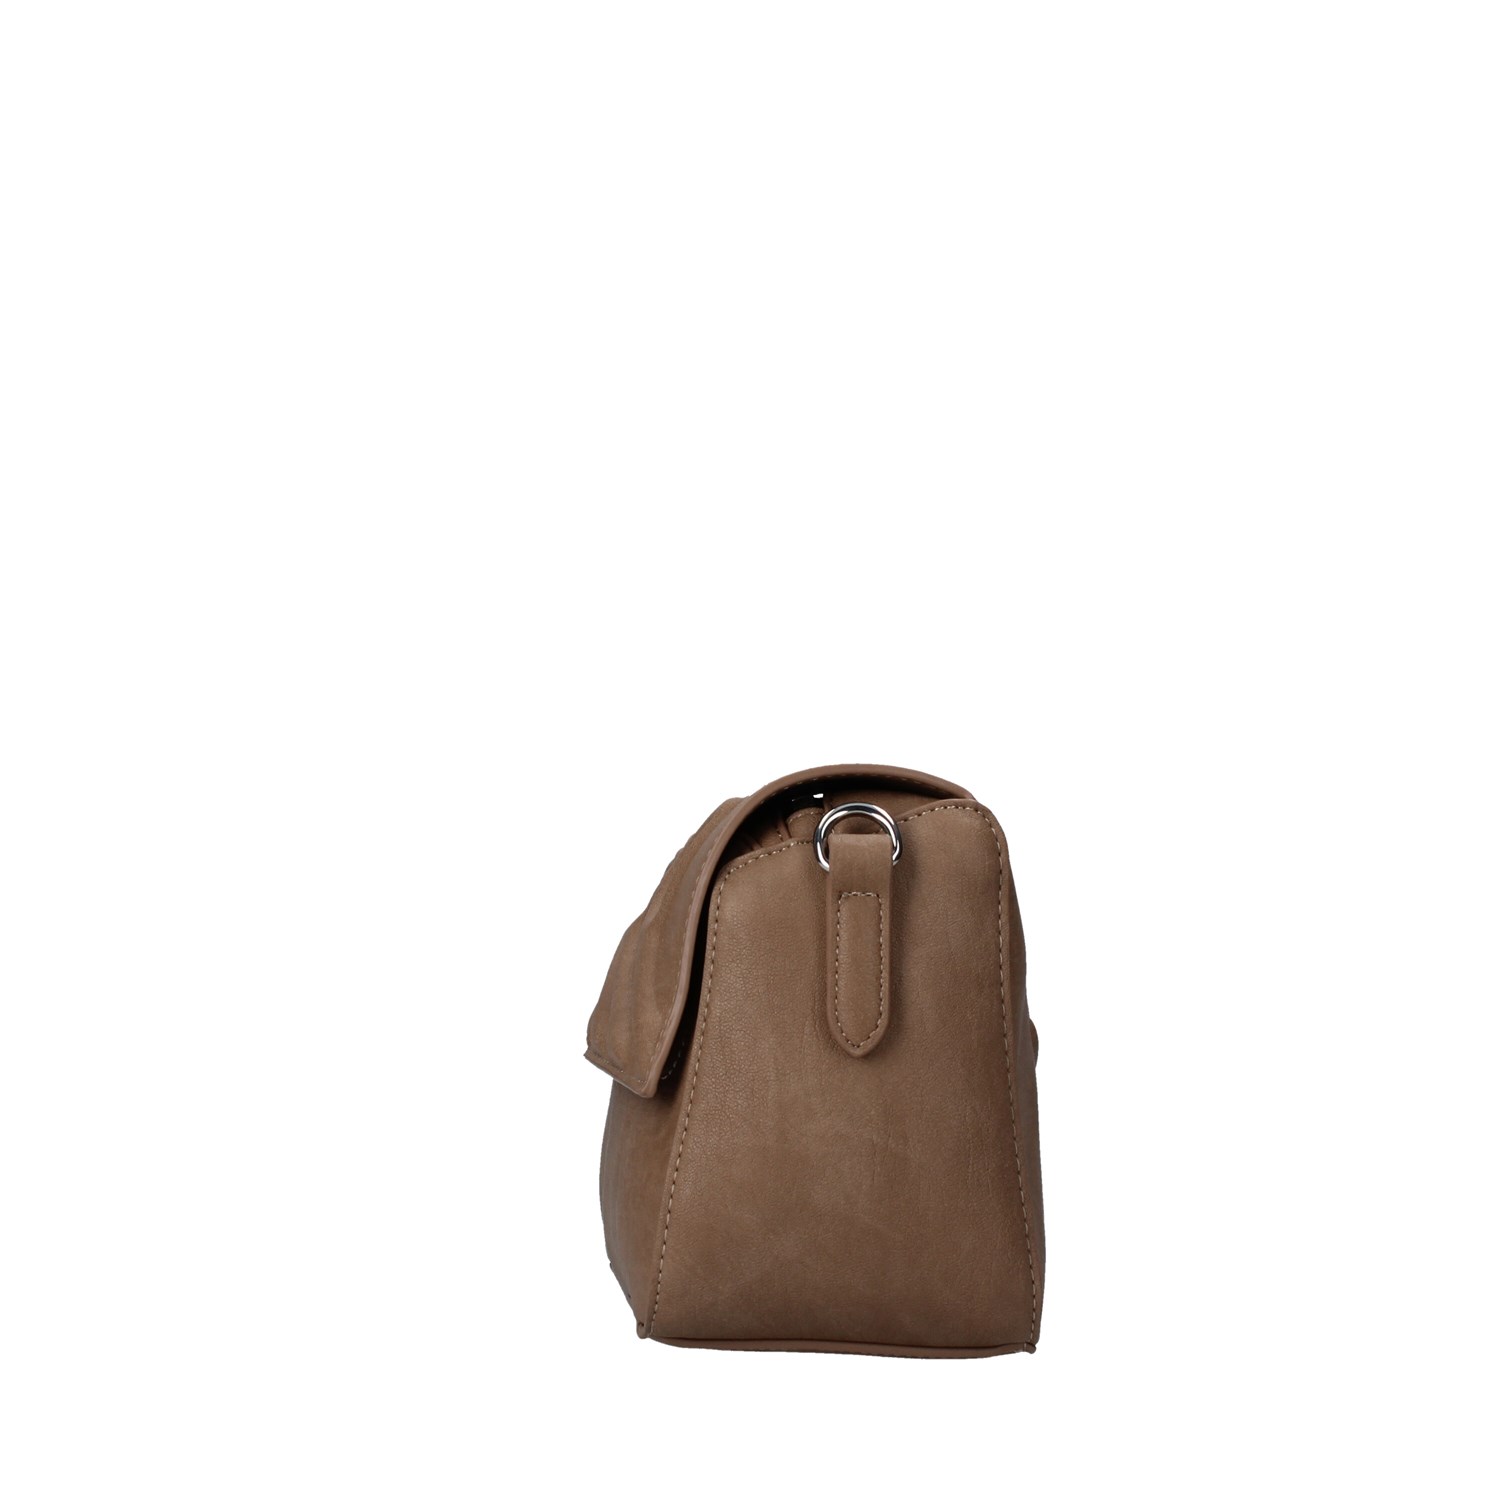 Desigual Bags Accessories Shoulder Strap BROWN 23SAXP35